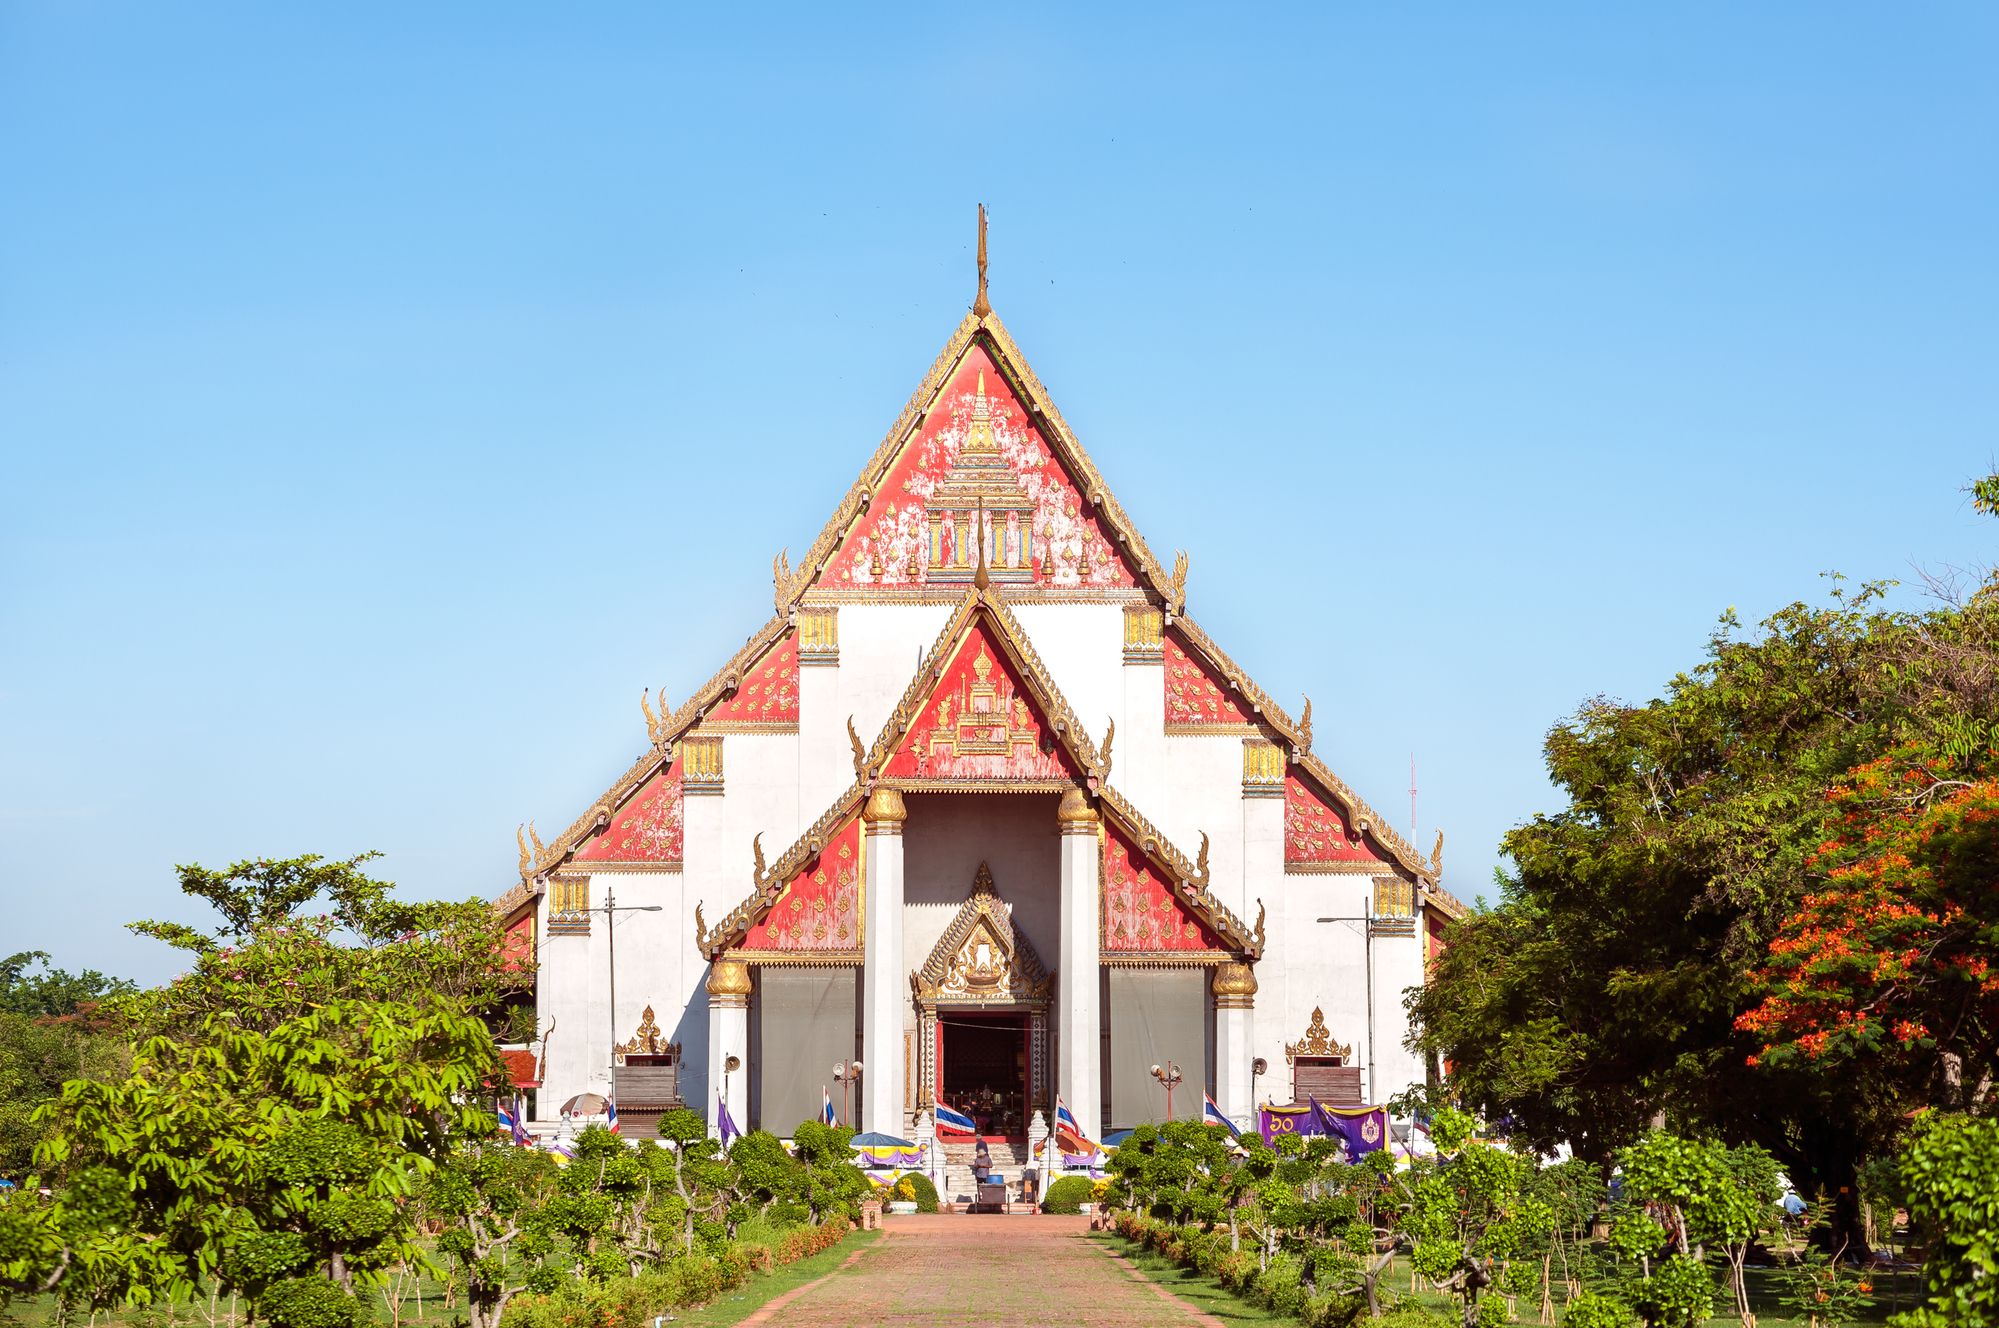 Wihan Phra Mongkhon Bophit Ayutthaya